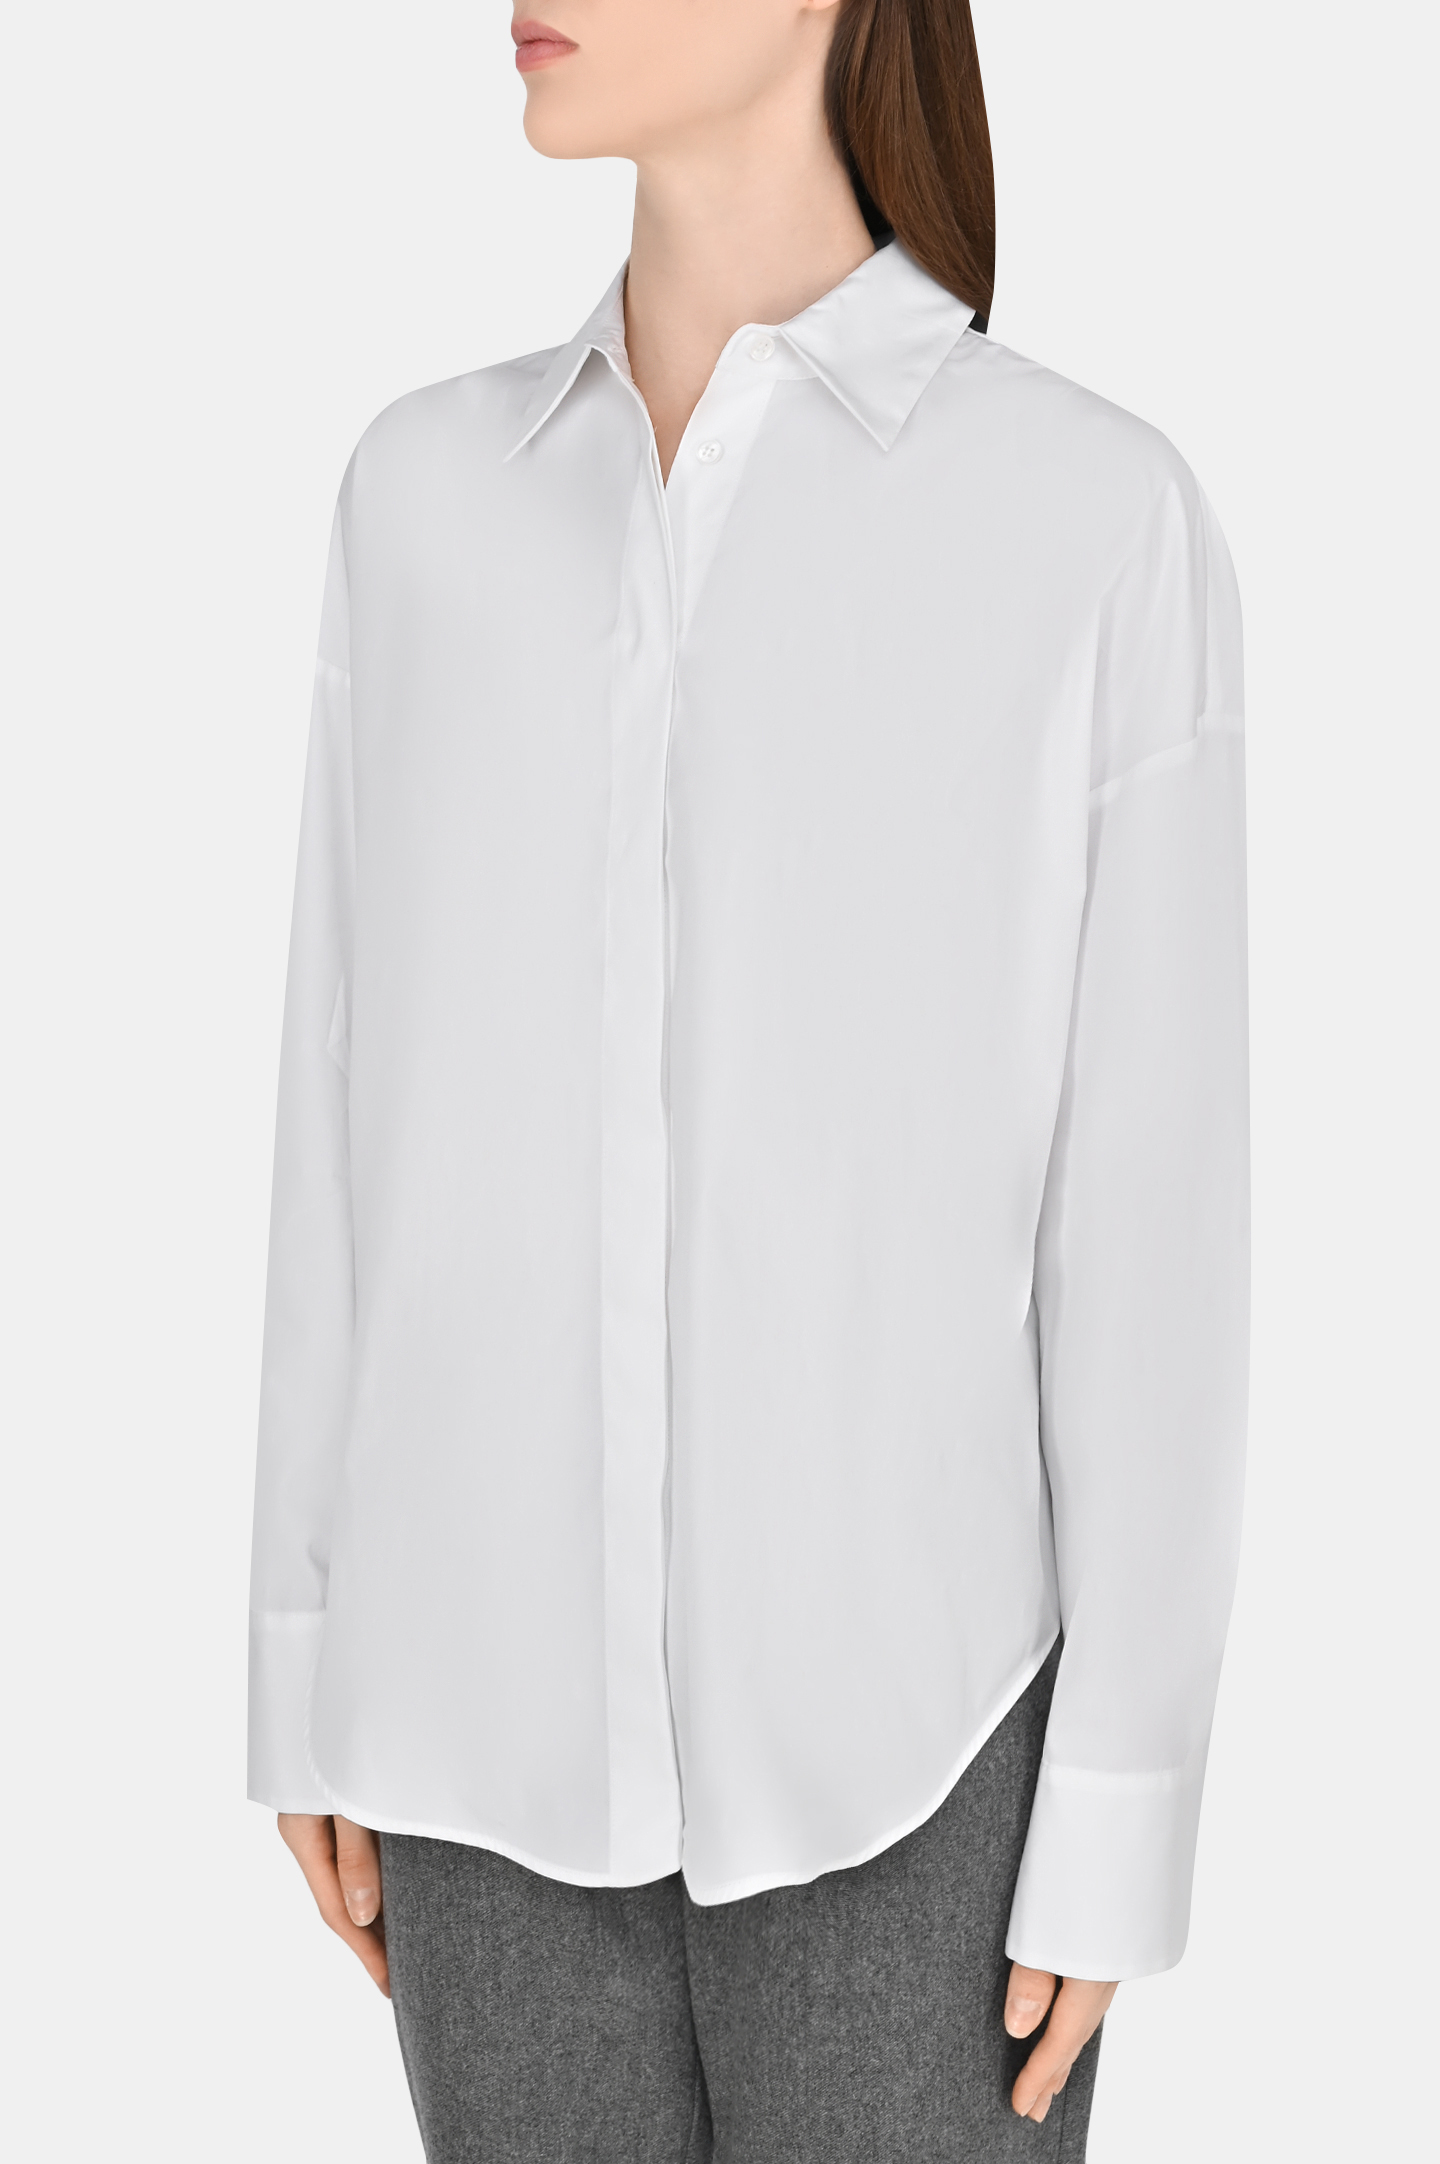 Рубашка LORENA ANTONIAZZI A2211CA01A, цвет: Белый, Женский